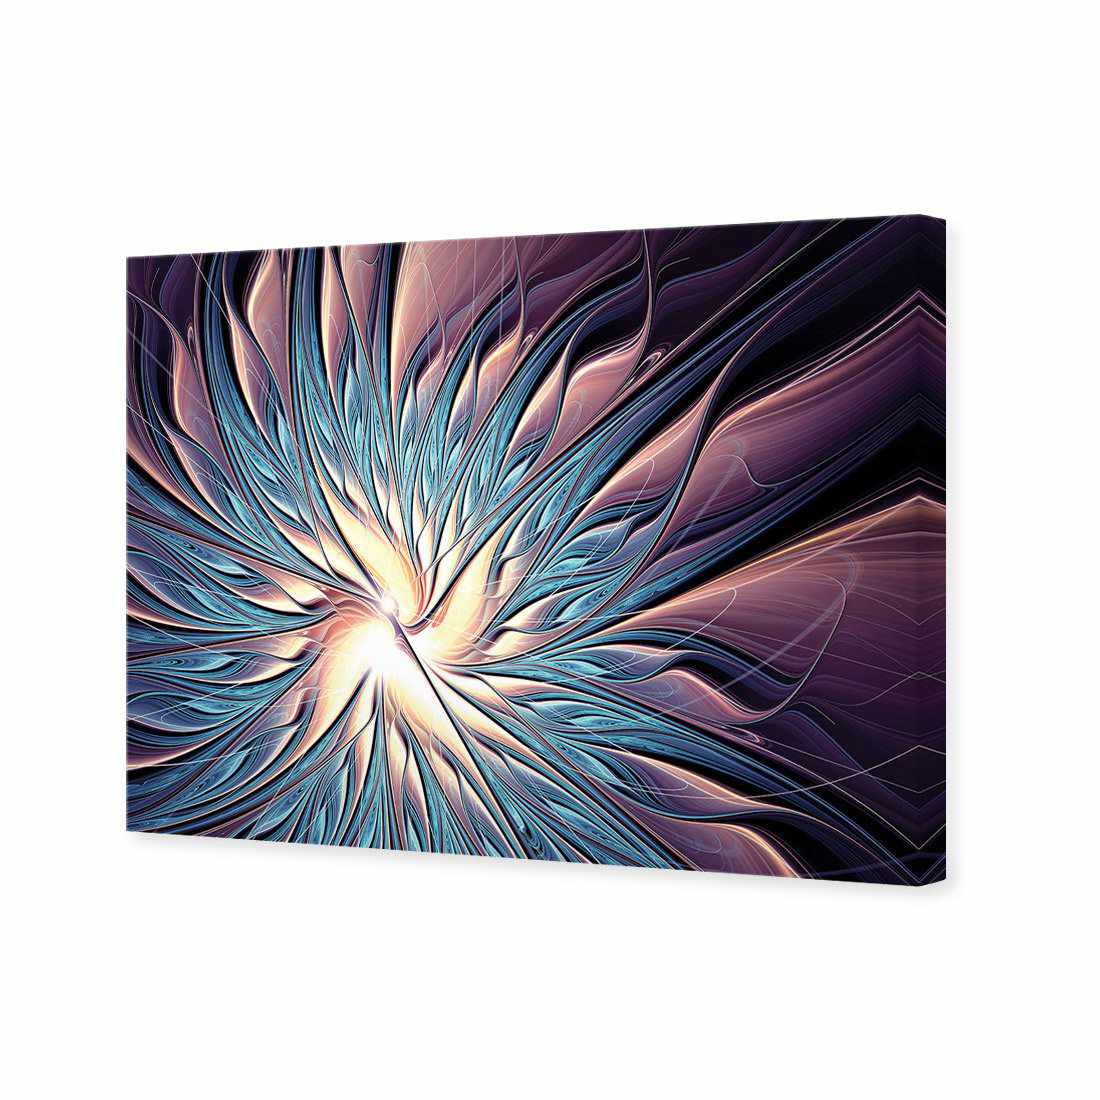 Shining Soul Canvas Art-Canvas-Wall Art Designs-45x30cm-Canvas - No Frame-Wall Art Designs